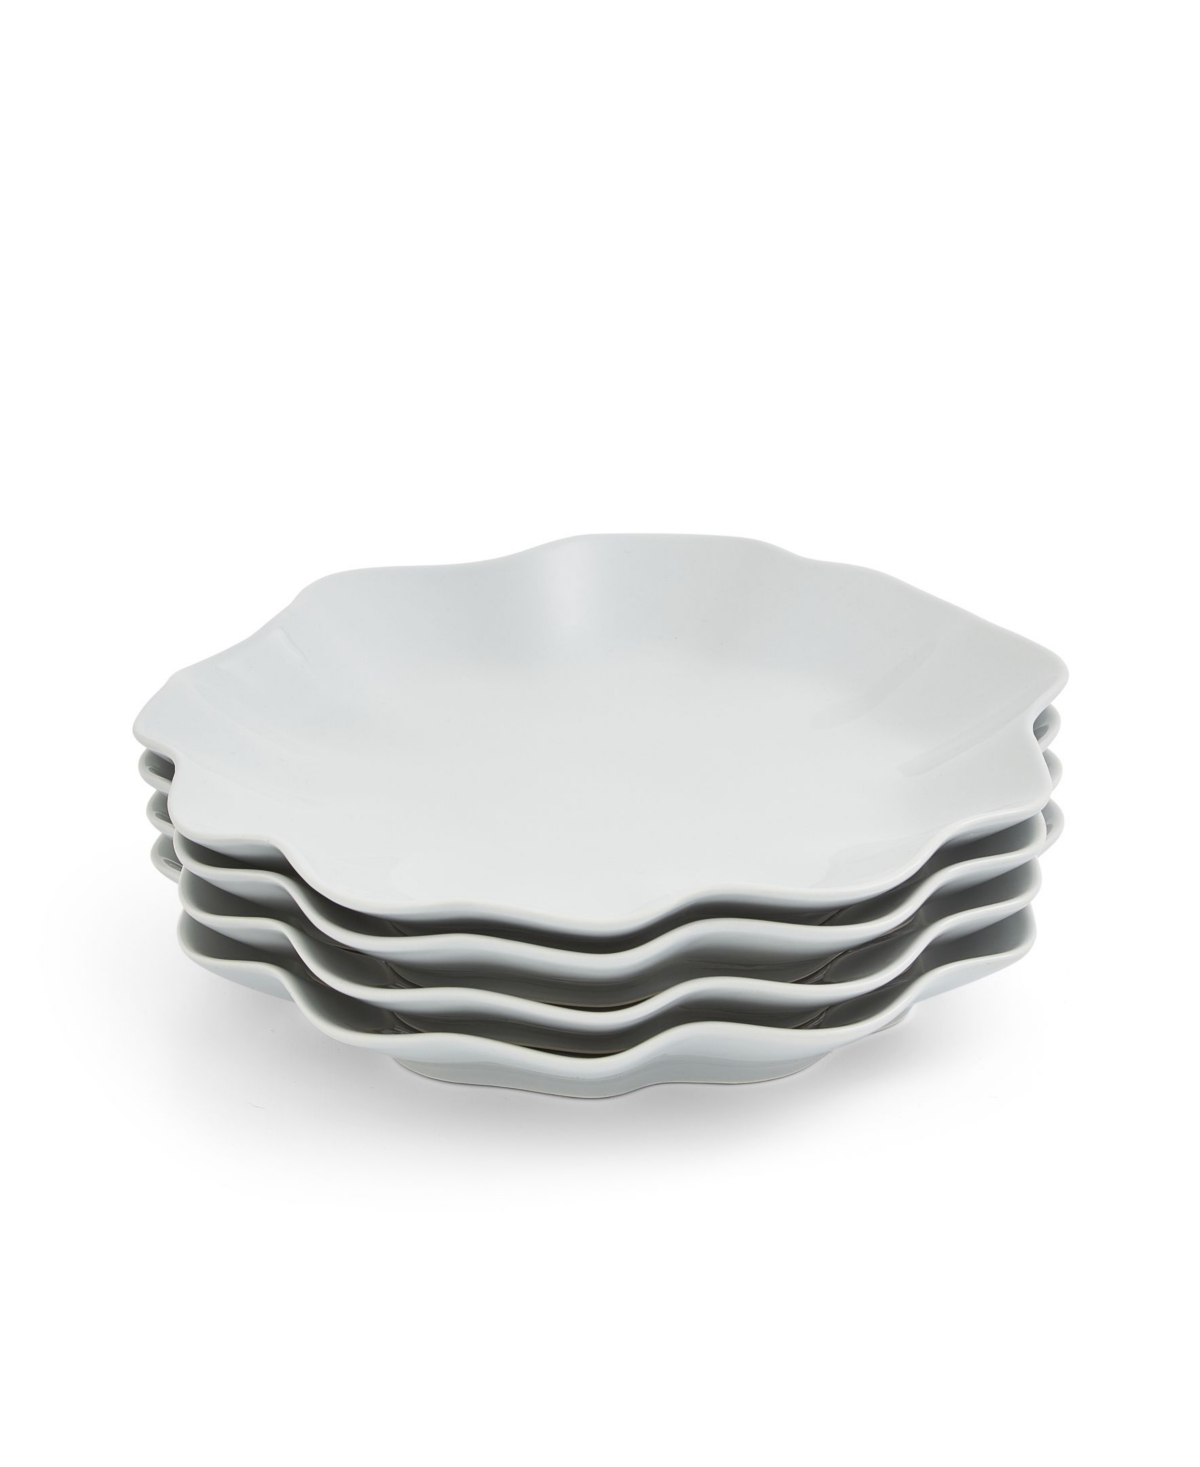 Sophie Conran Floret Dinner Plate, Set of 4 - Dove Gray